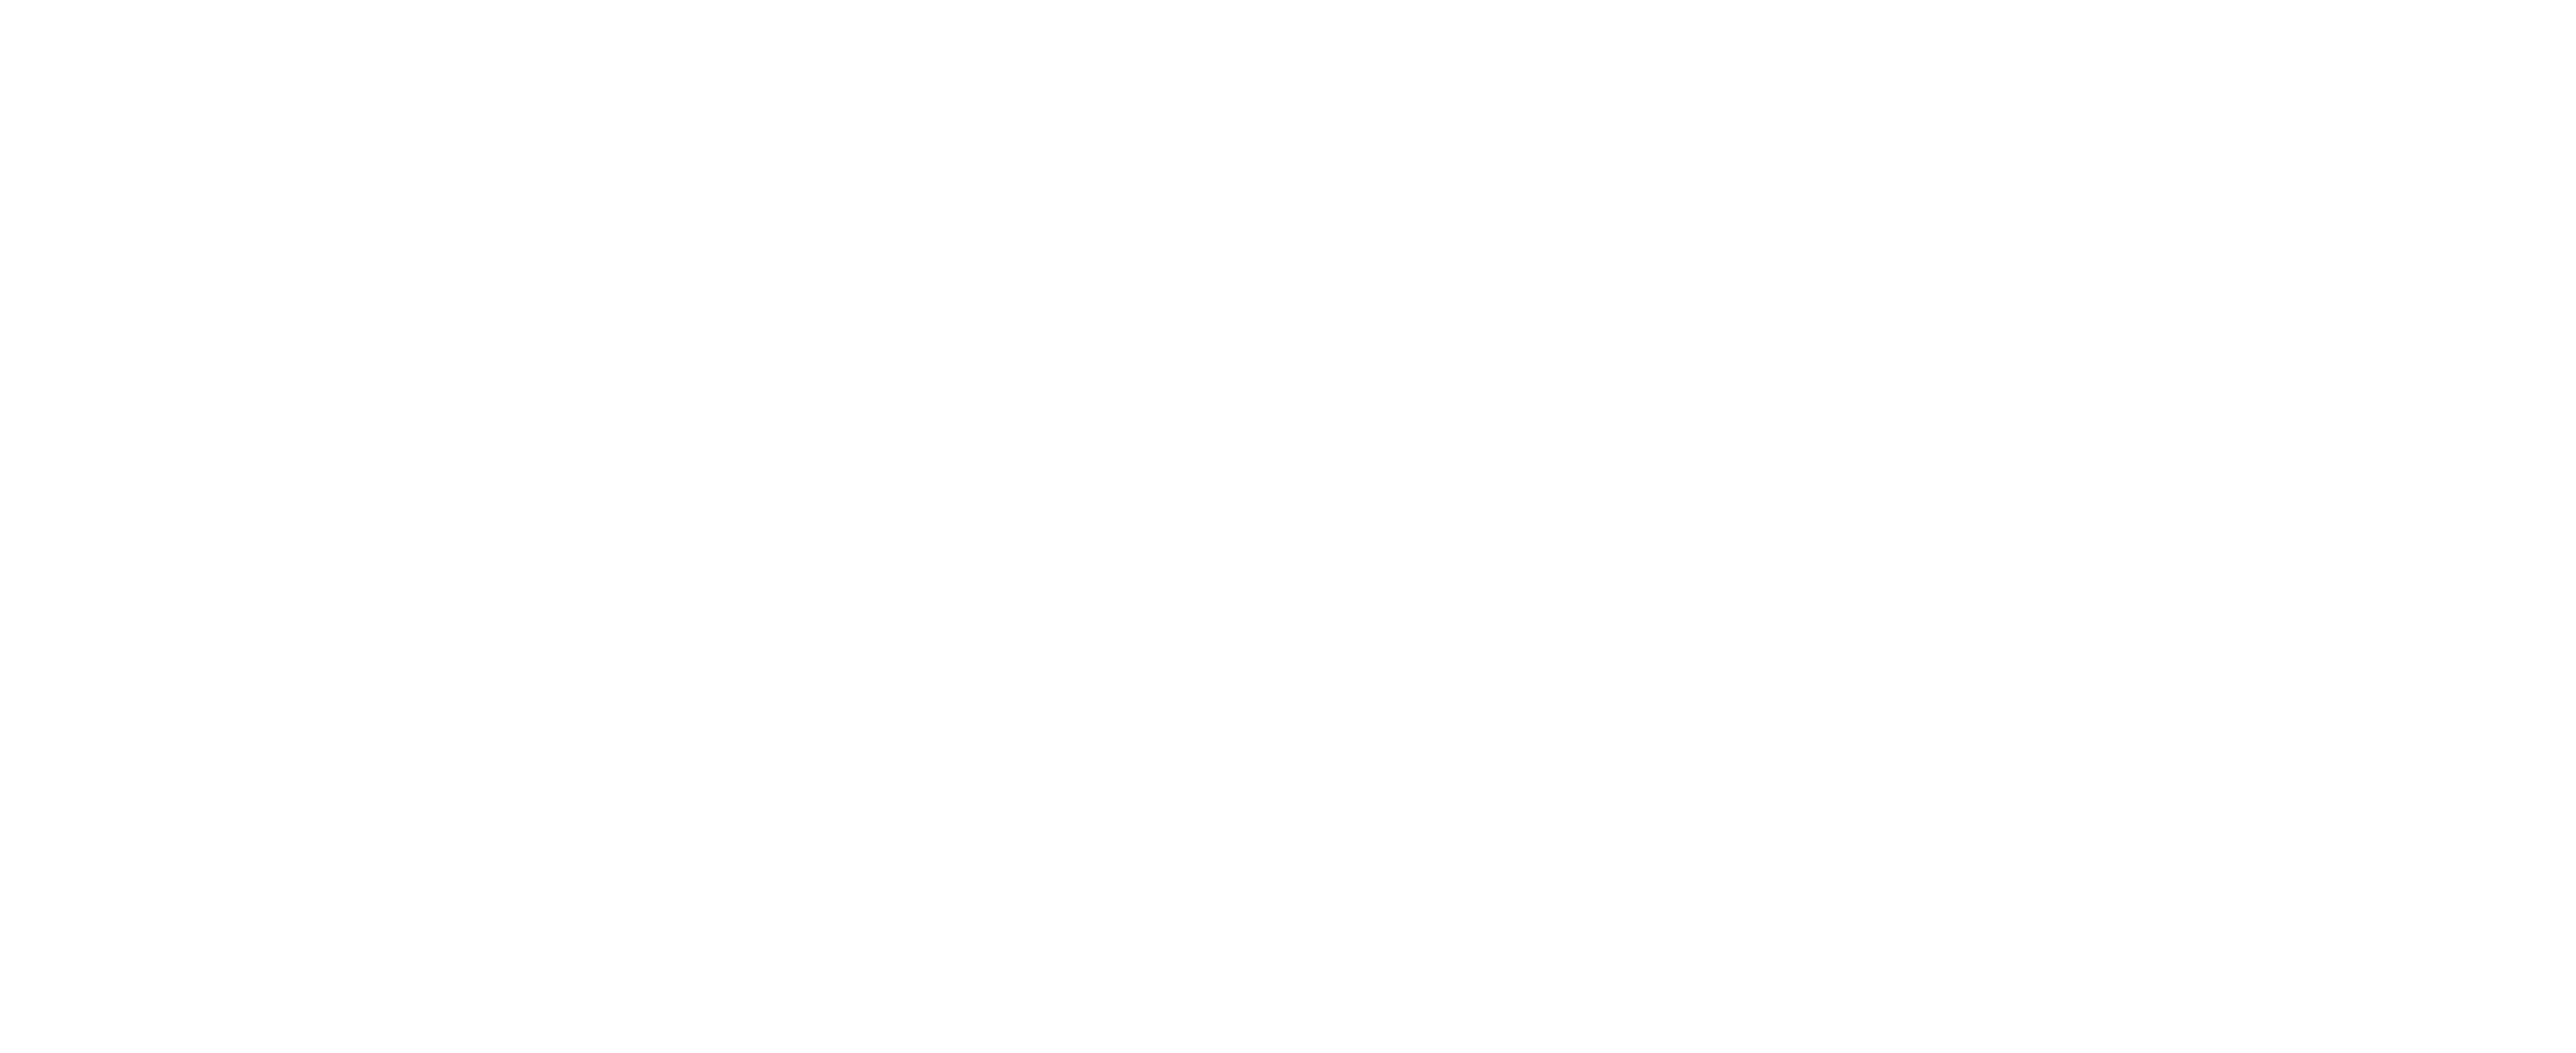 logo_rica